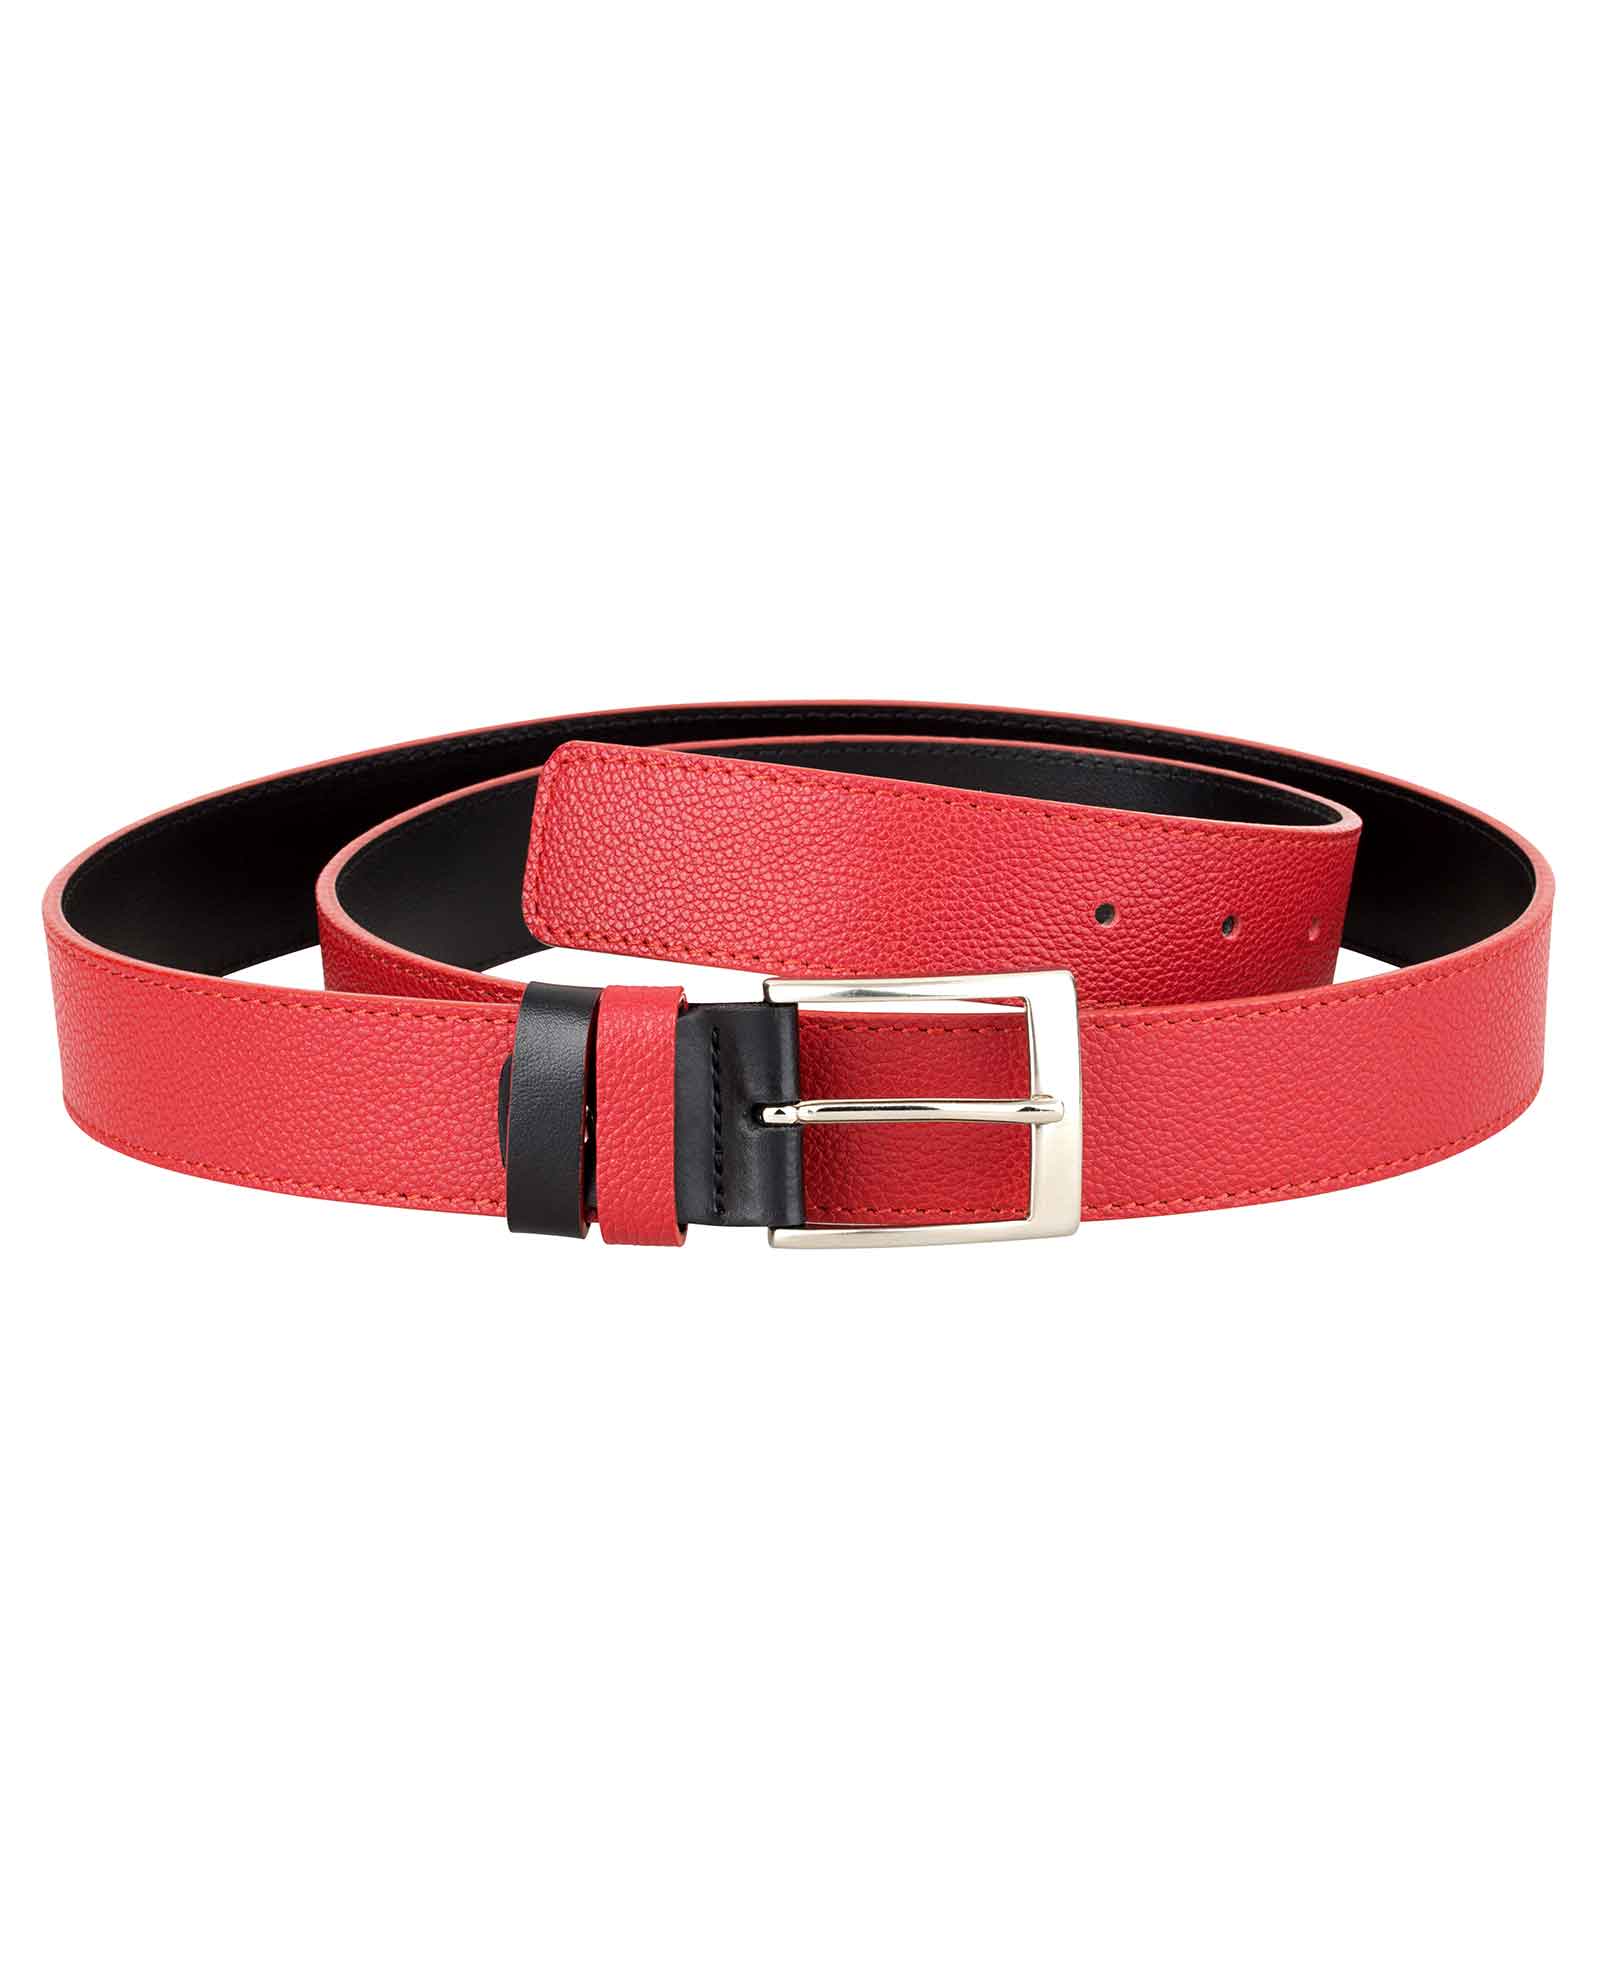 Buy Red Black Reversible Belt - LeatherBeltsOnline.com - Free Shipping